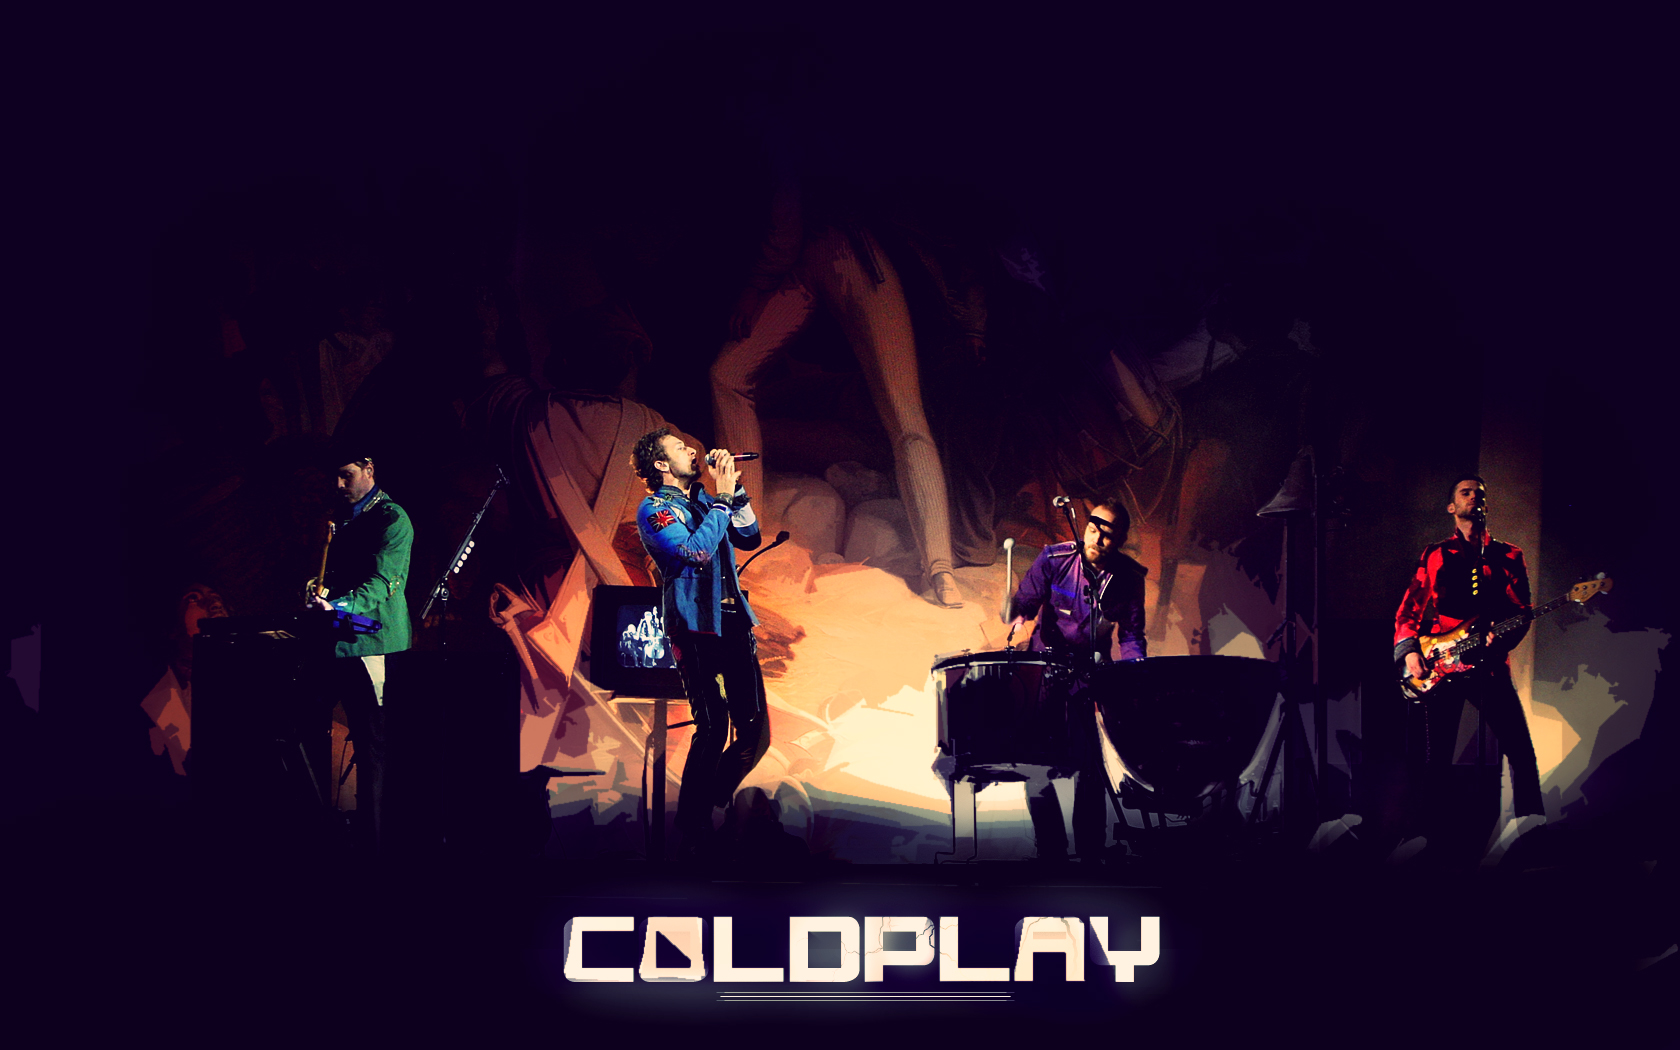 Coldplay Full Paint Art Wallpaper